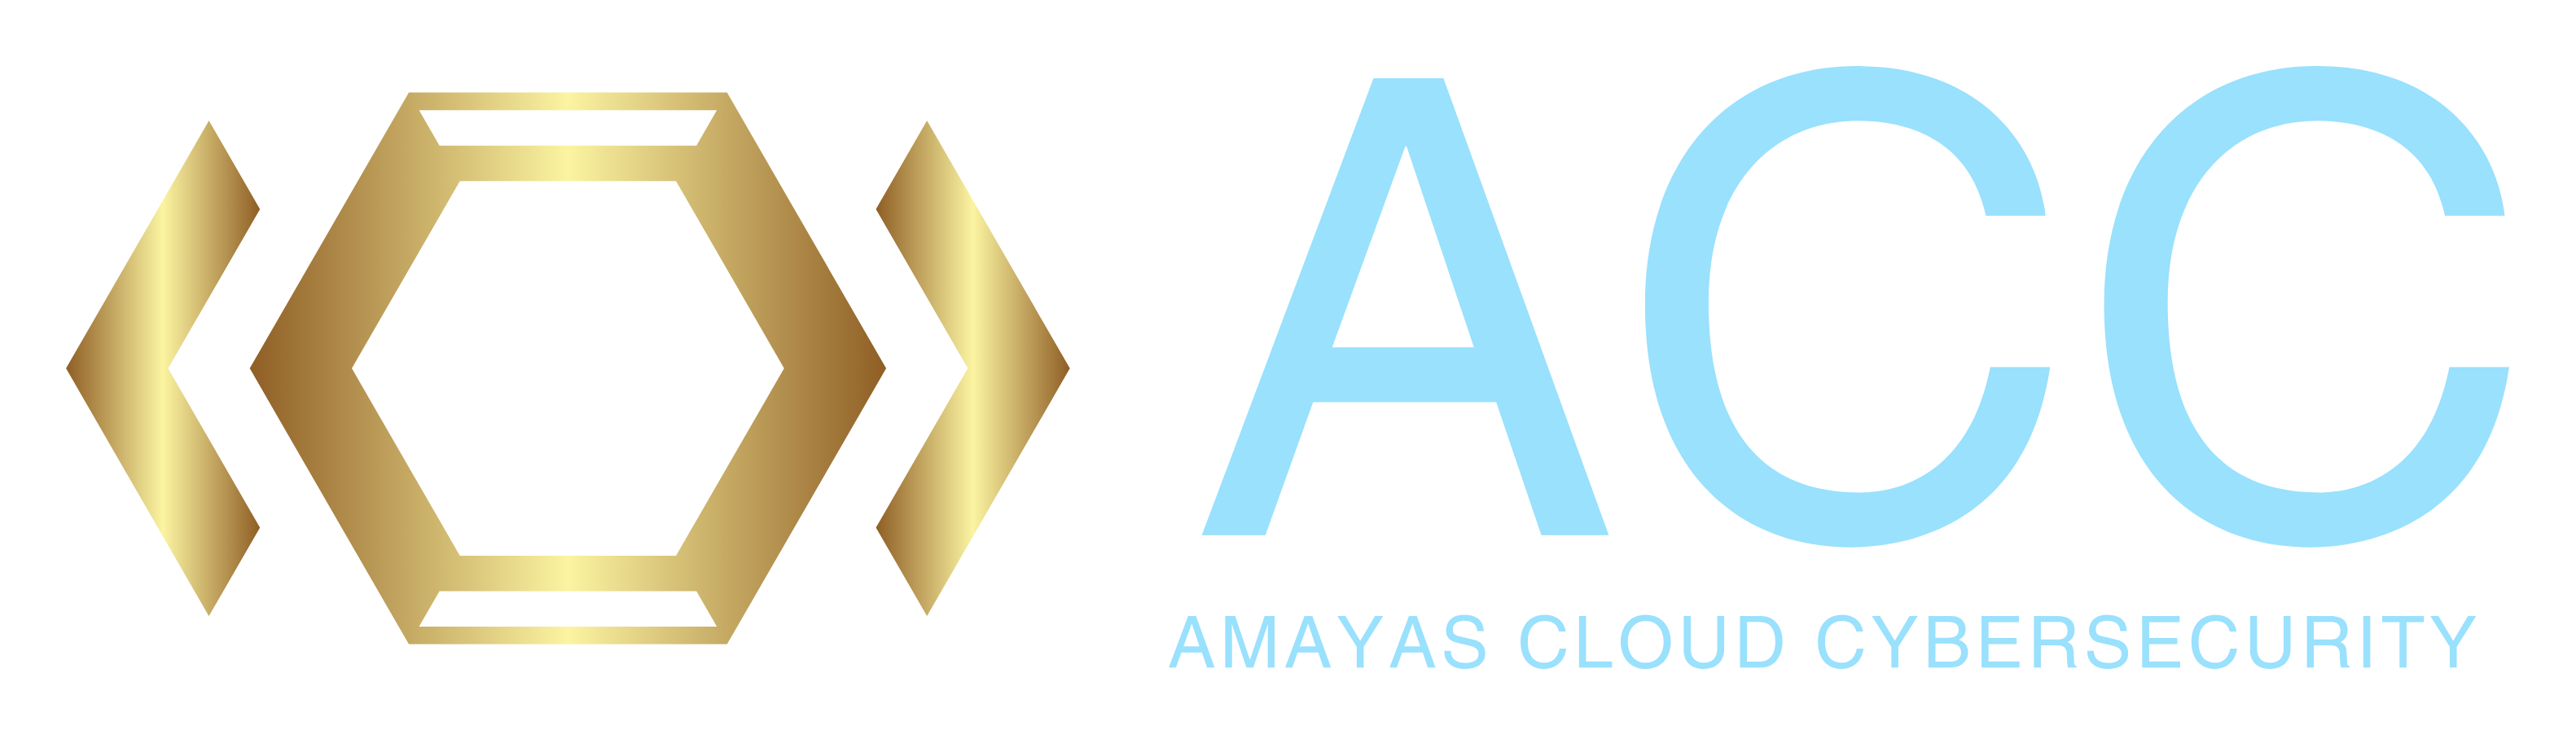 AMAYAS Consulting logo